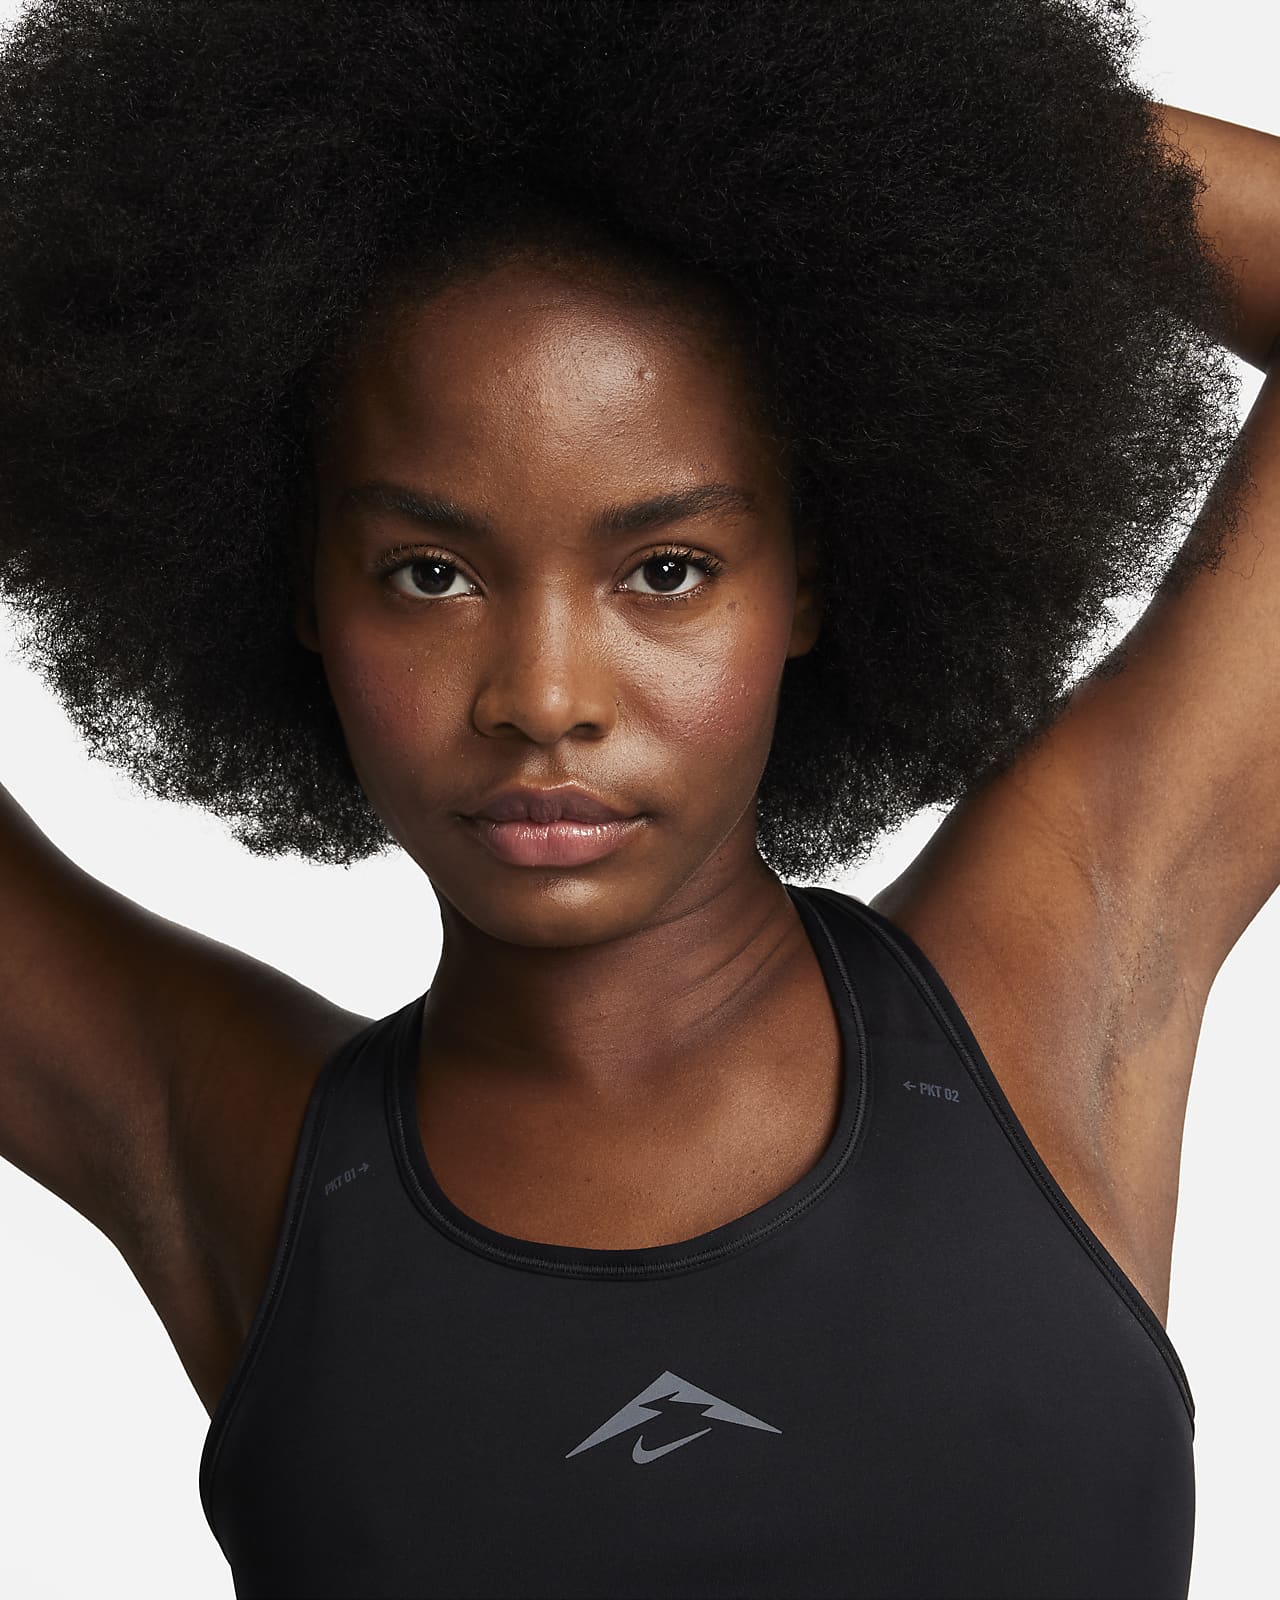 Nike Trail Swoosh On-the-Run Women's Medium-Support Lightly Lined Sports Bra.  Nike CA